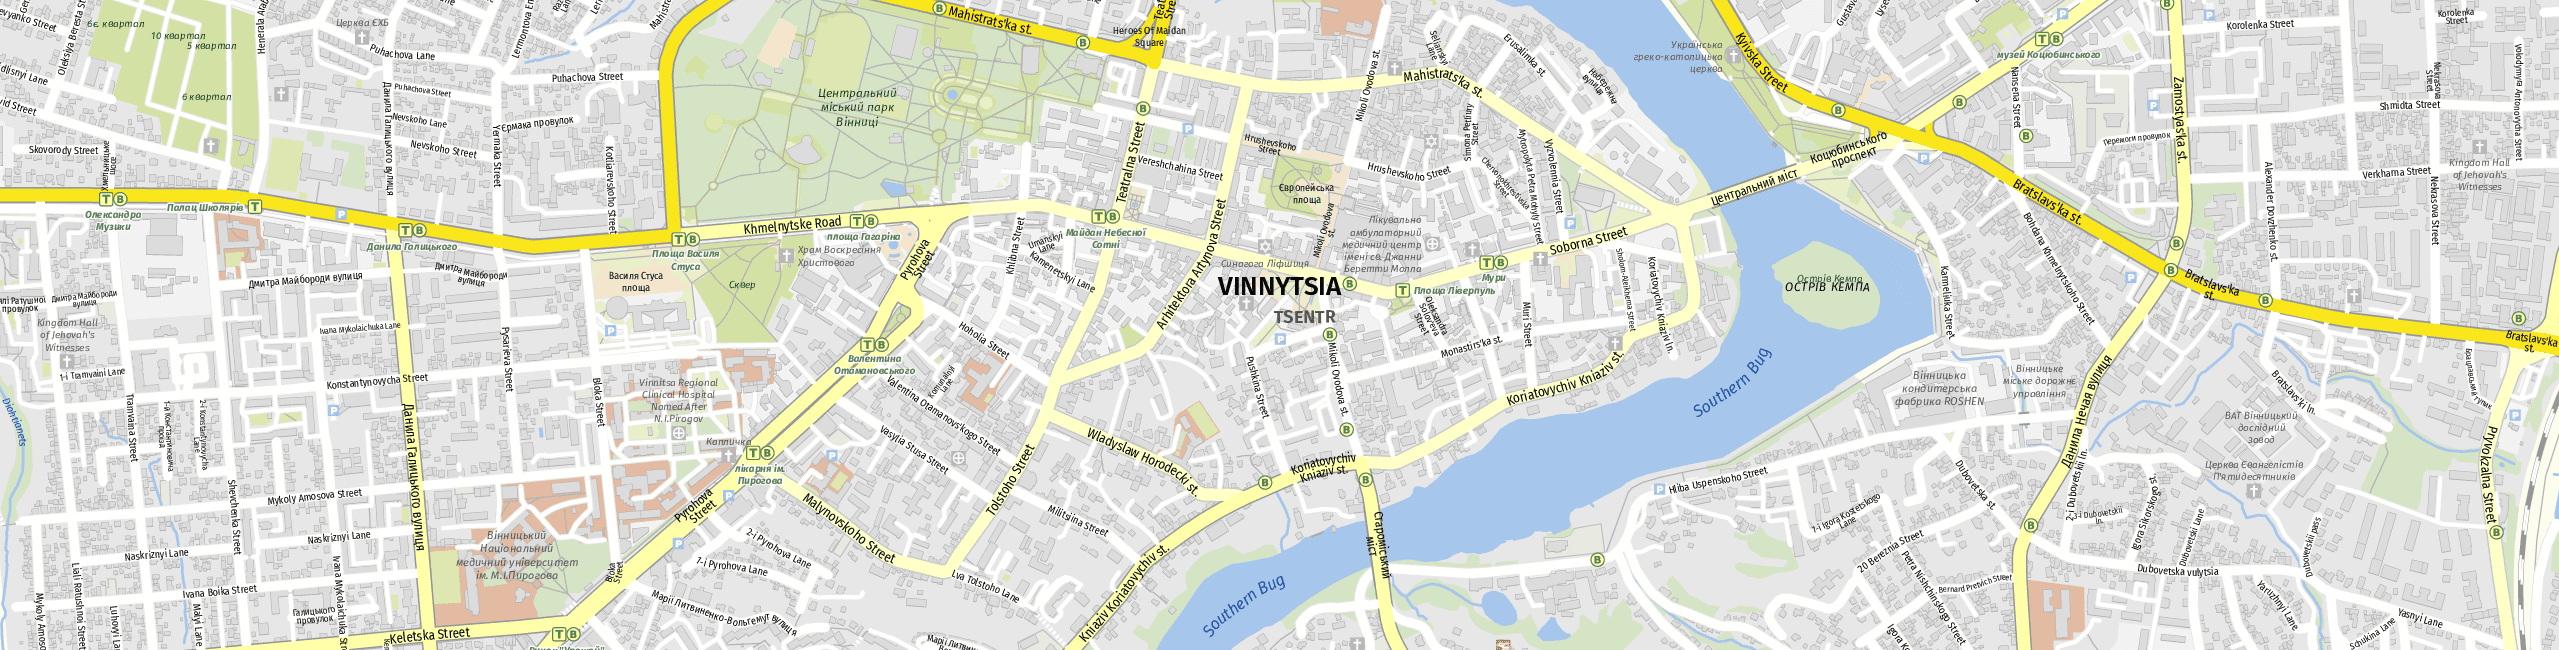 Stadtplan Winnyzja zum Downloaden.